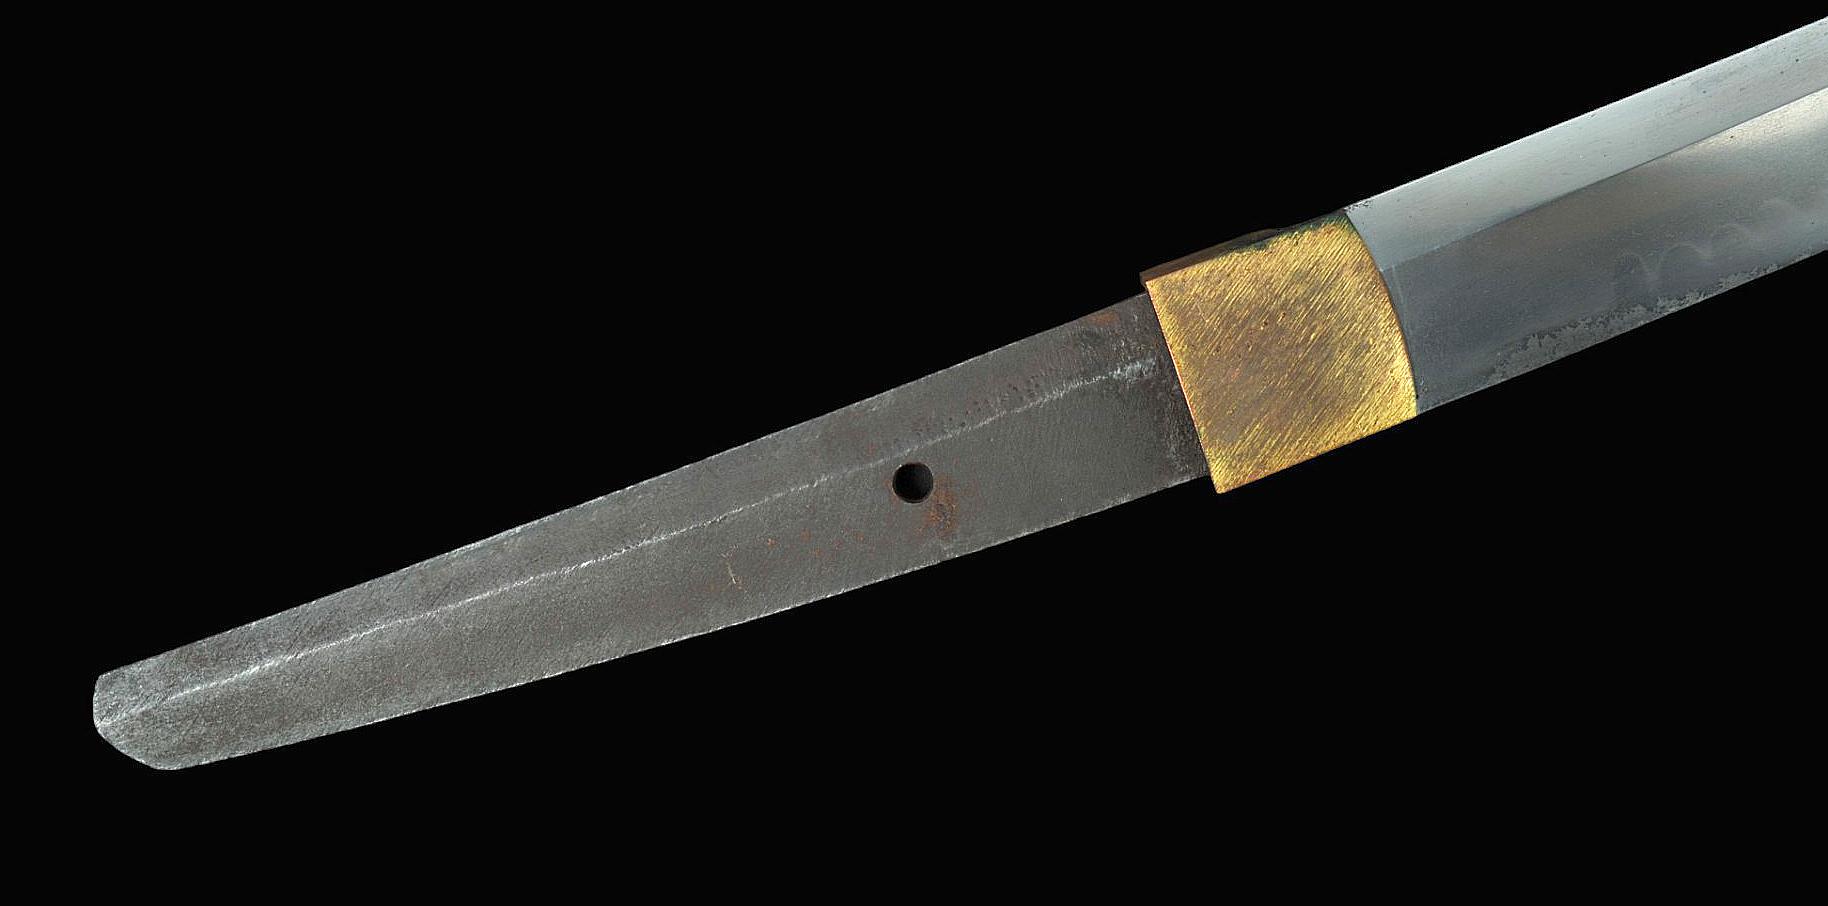 Japanese Katana Samurai Sword, 1800's vintage (MGX)